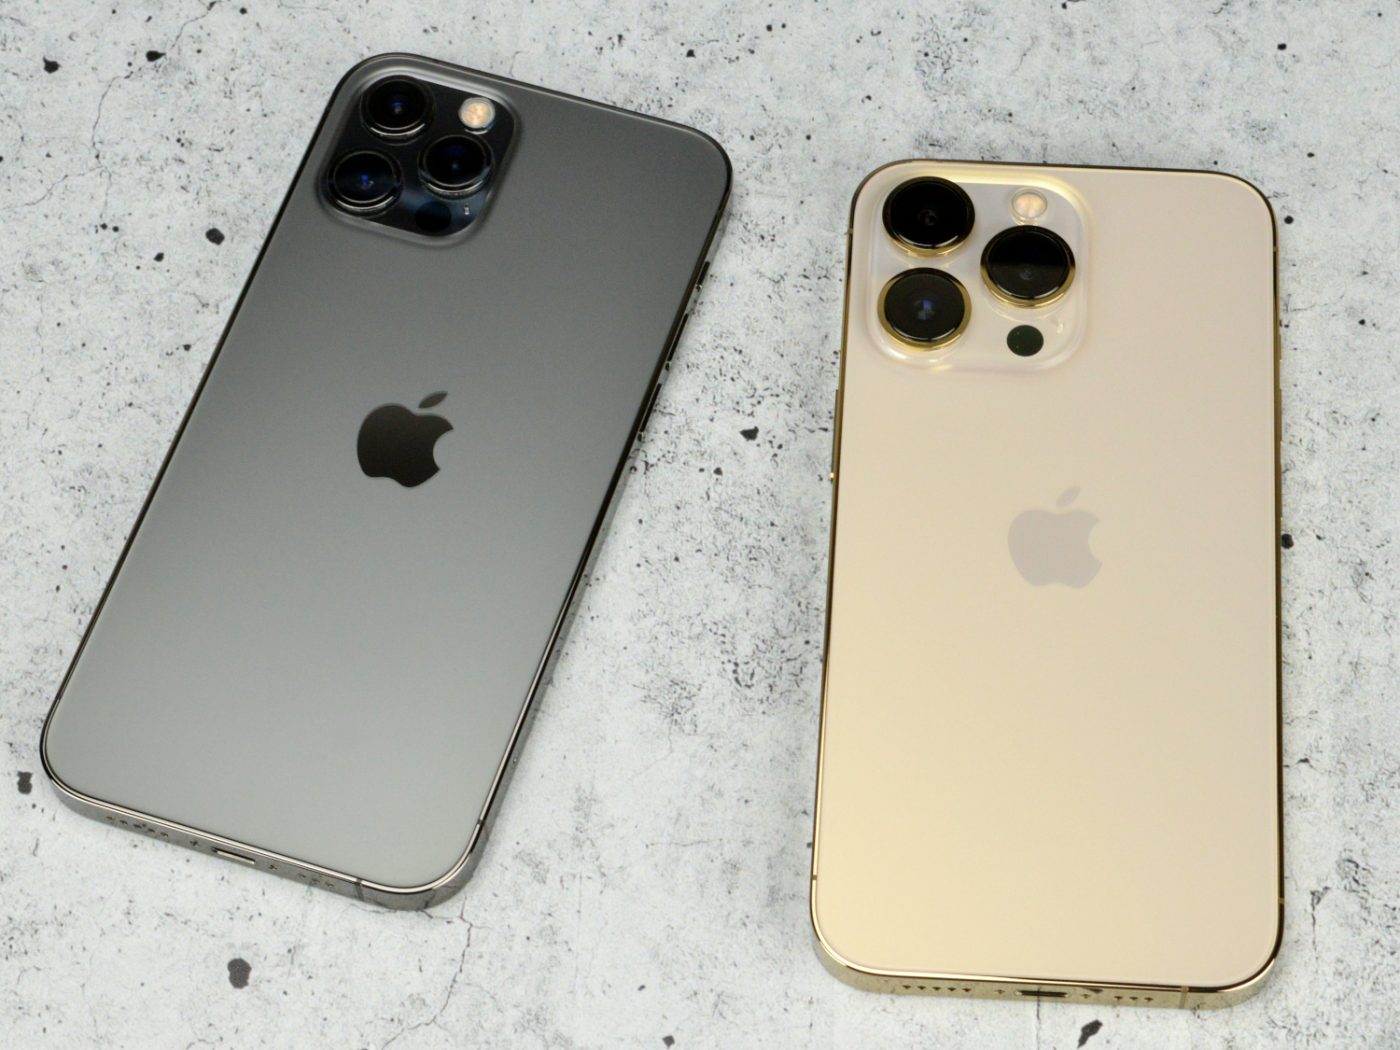 iPhone 13 Pro Max vs iPhone 12 Pro Max: Should You Upgrade?